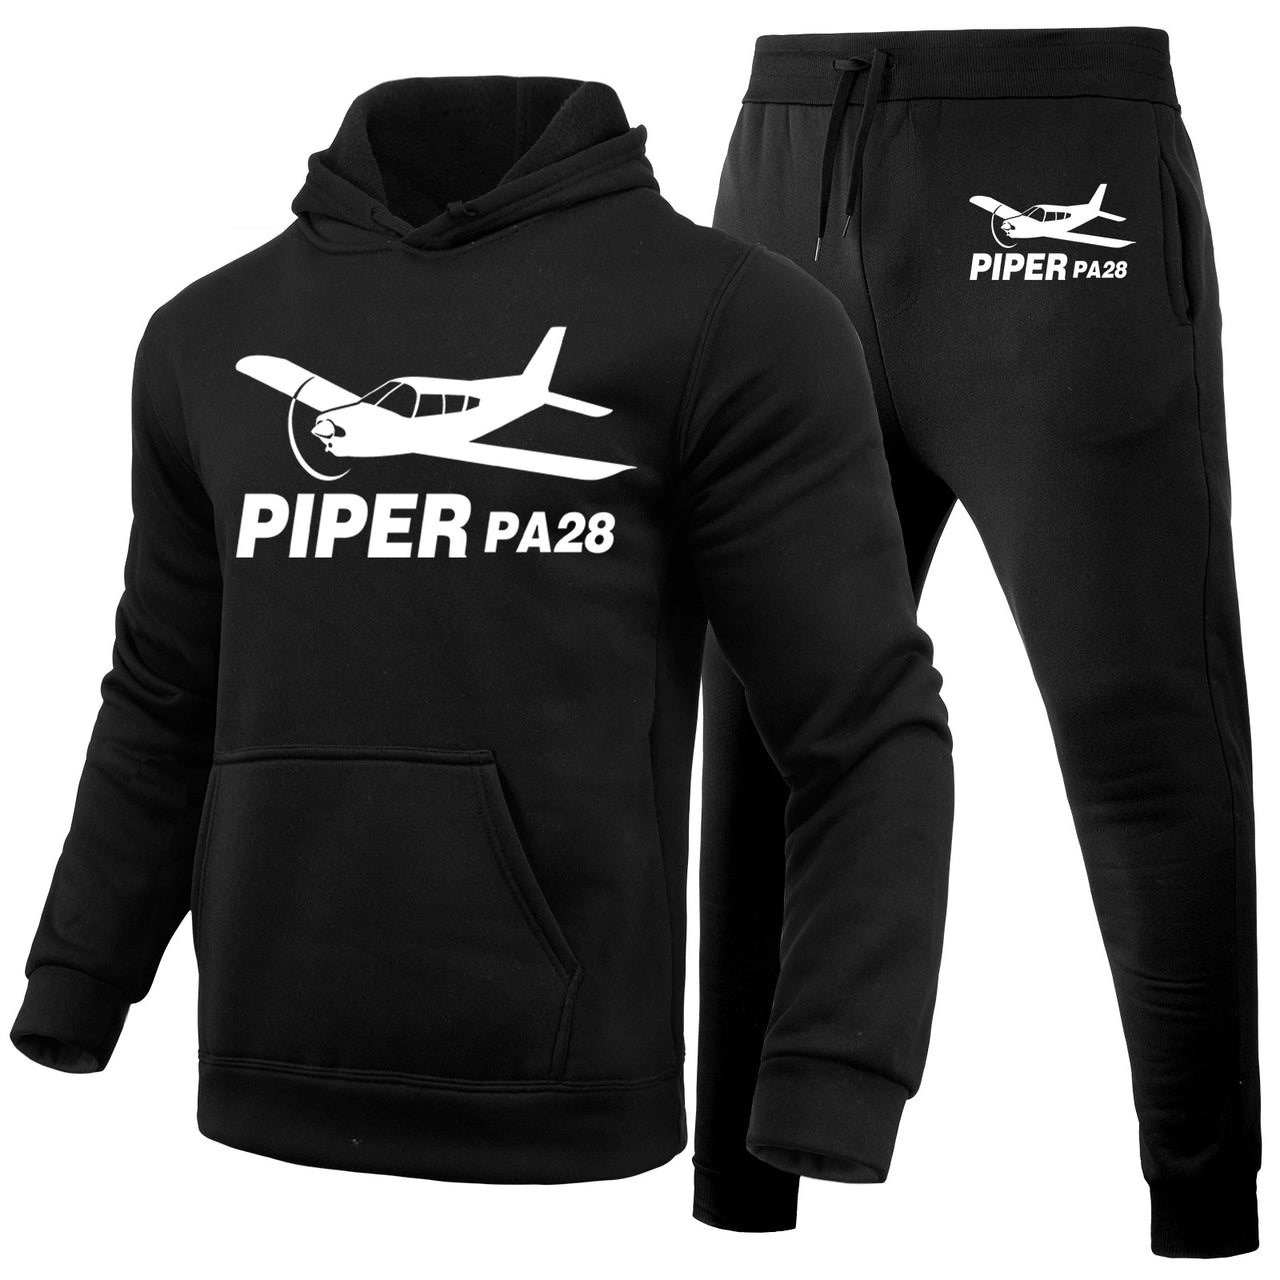 The Piper PA28 Designed Hoodies & Sweatpants Set